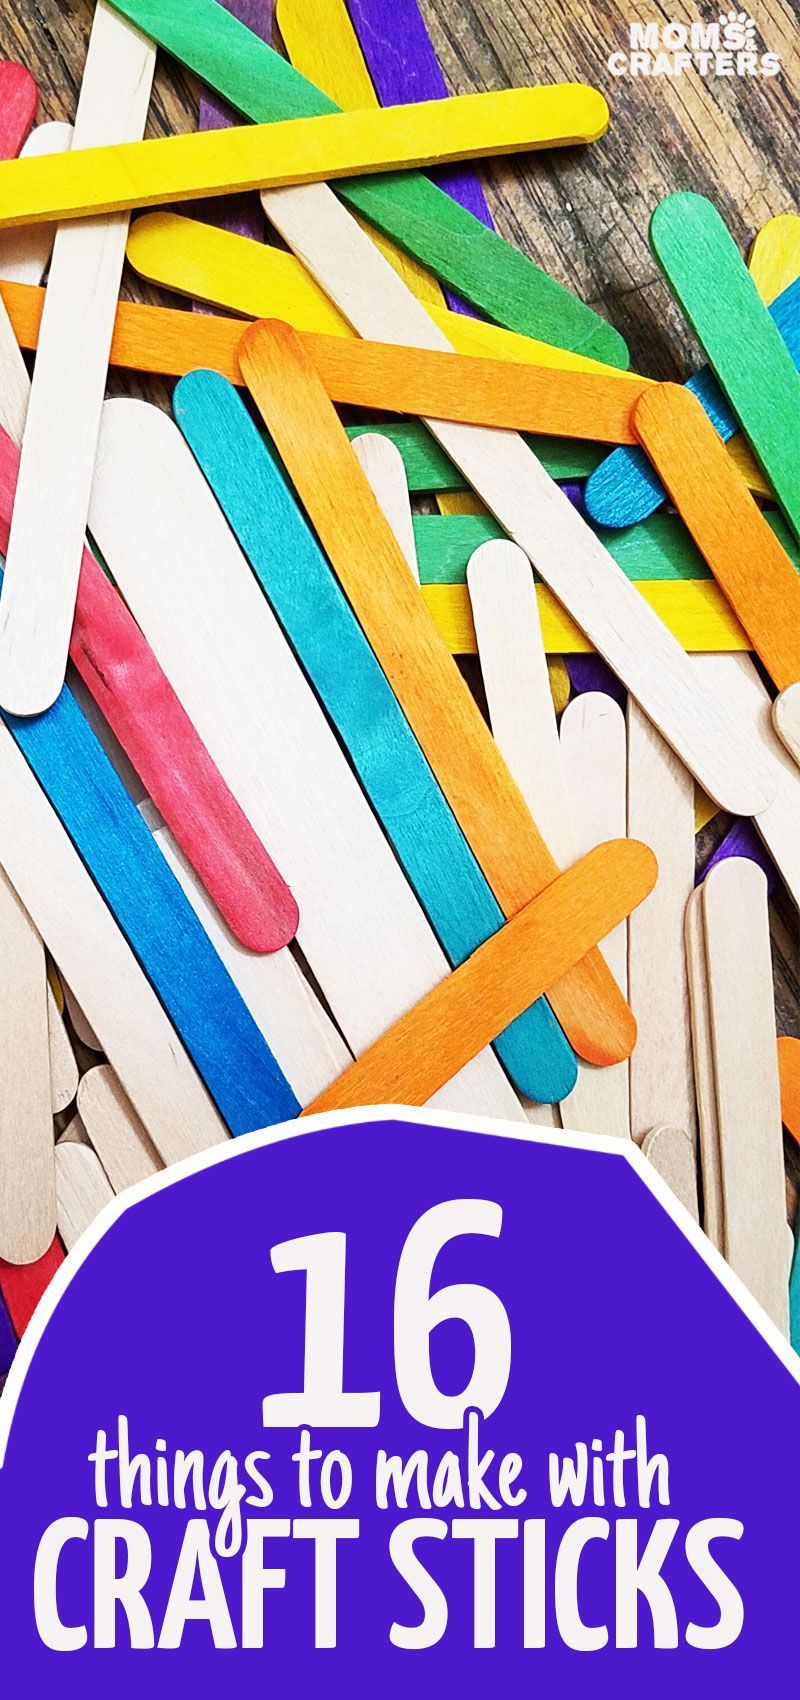 14 DIY Clothes For School popsicle sticks ideas